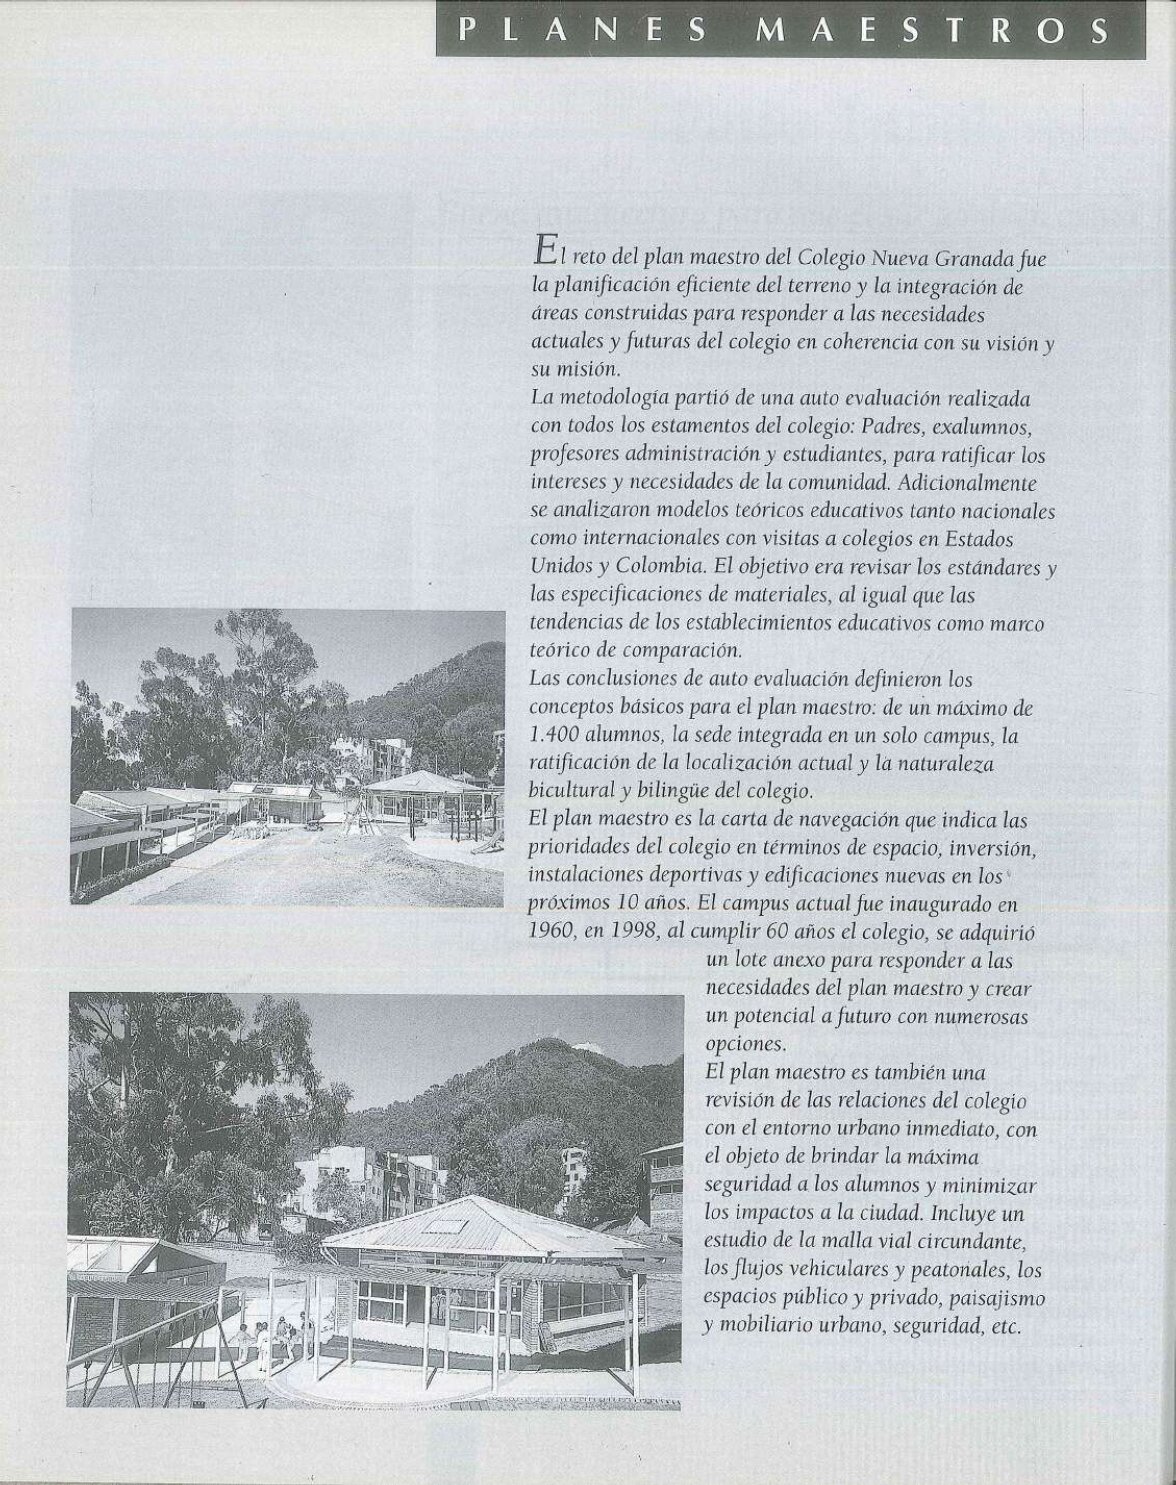 2002_Contexto Urbano- Obra reciente 1995-2002. REVISTA PROA 1_compressed (1)_page-0032.jpg